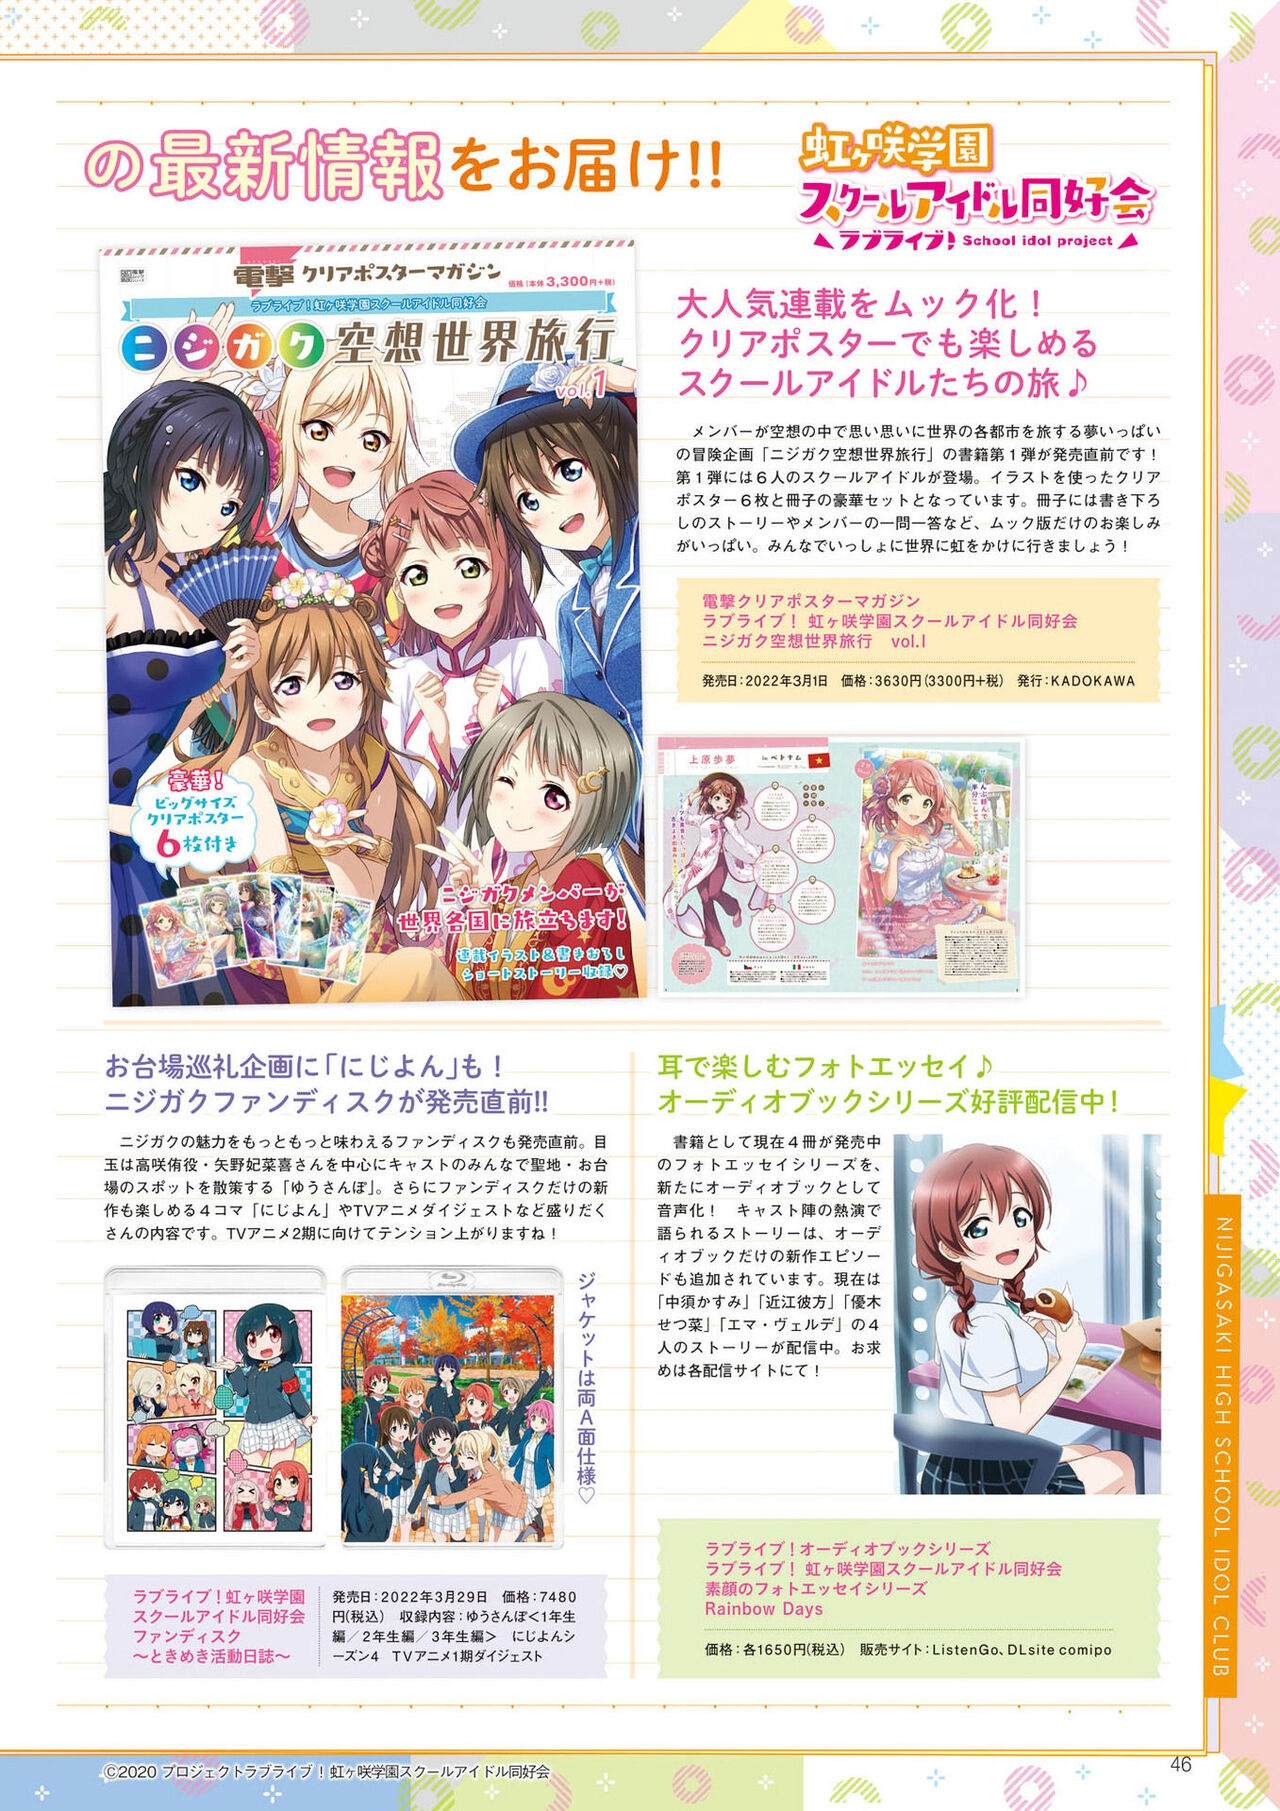 Dengeki G's Magazine #297 - April 2022 43